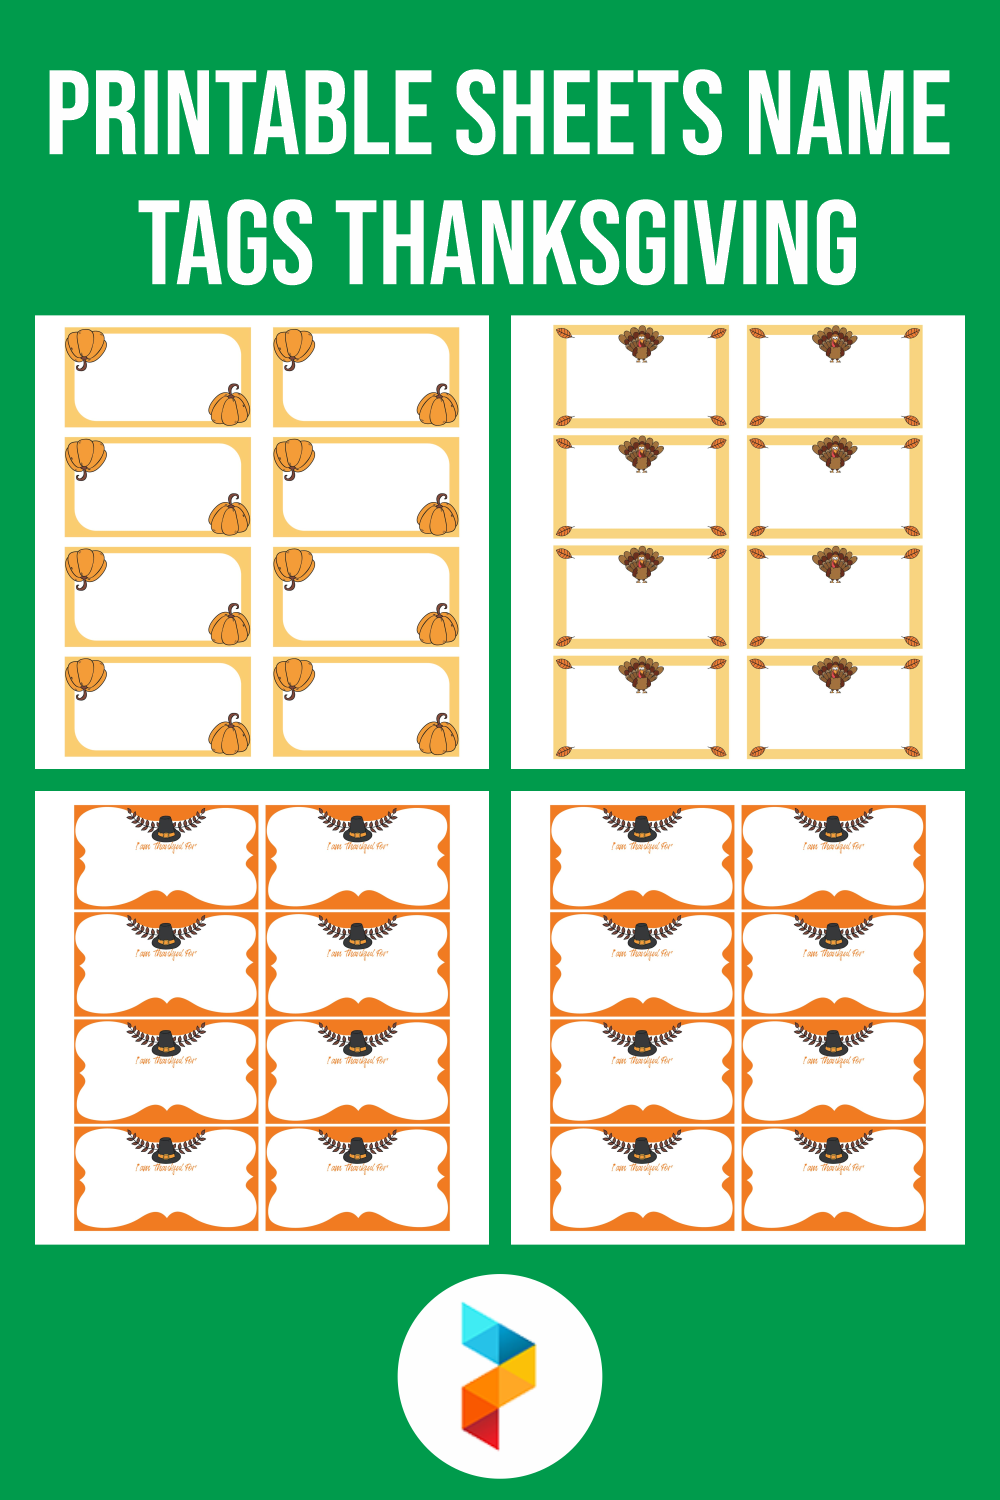 Printable Sheets Name Tags Thanksgiving